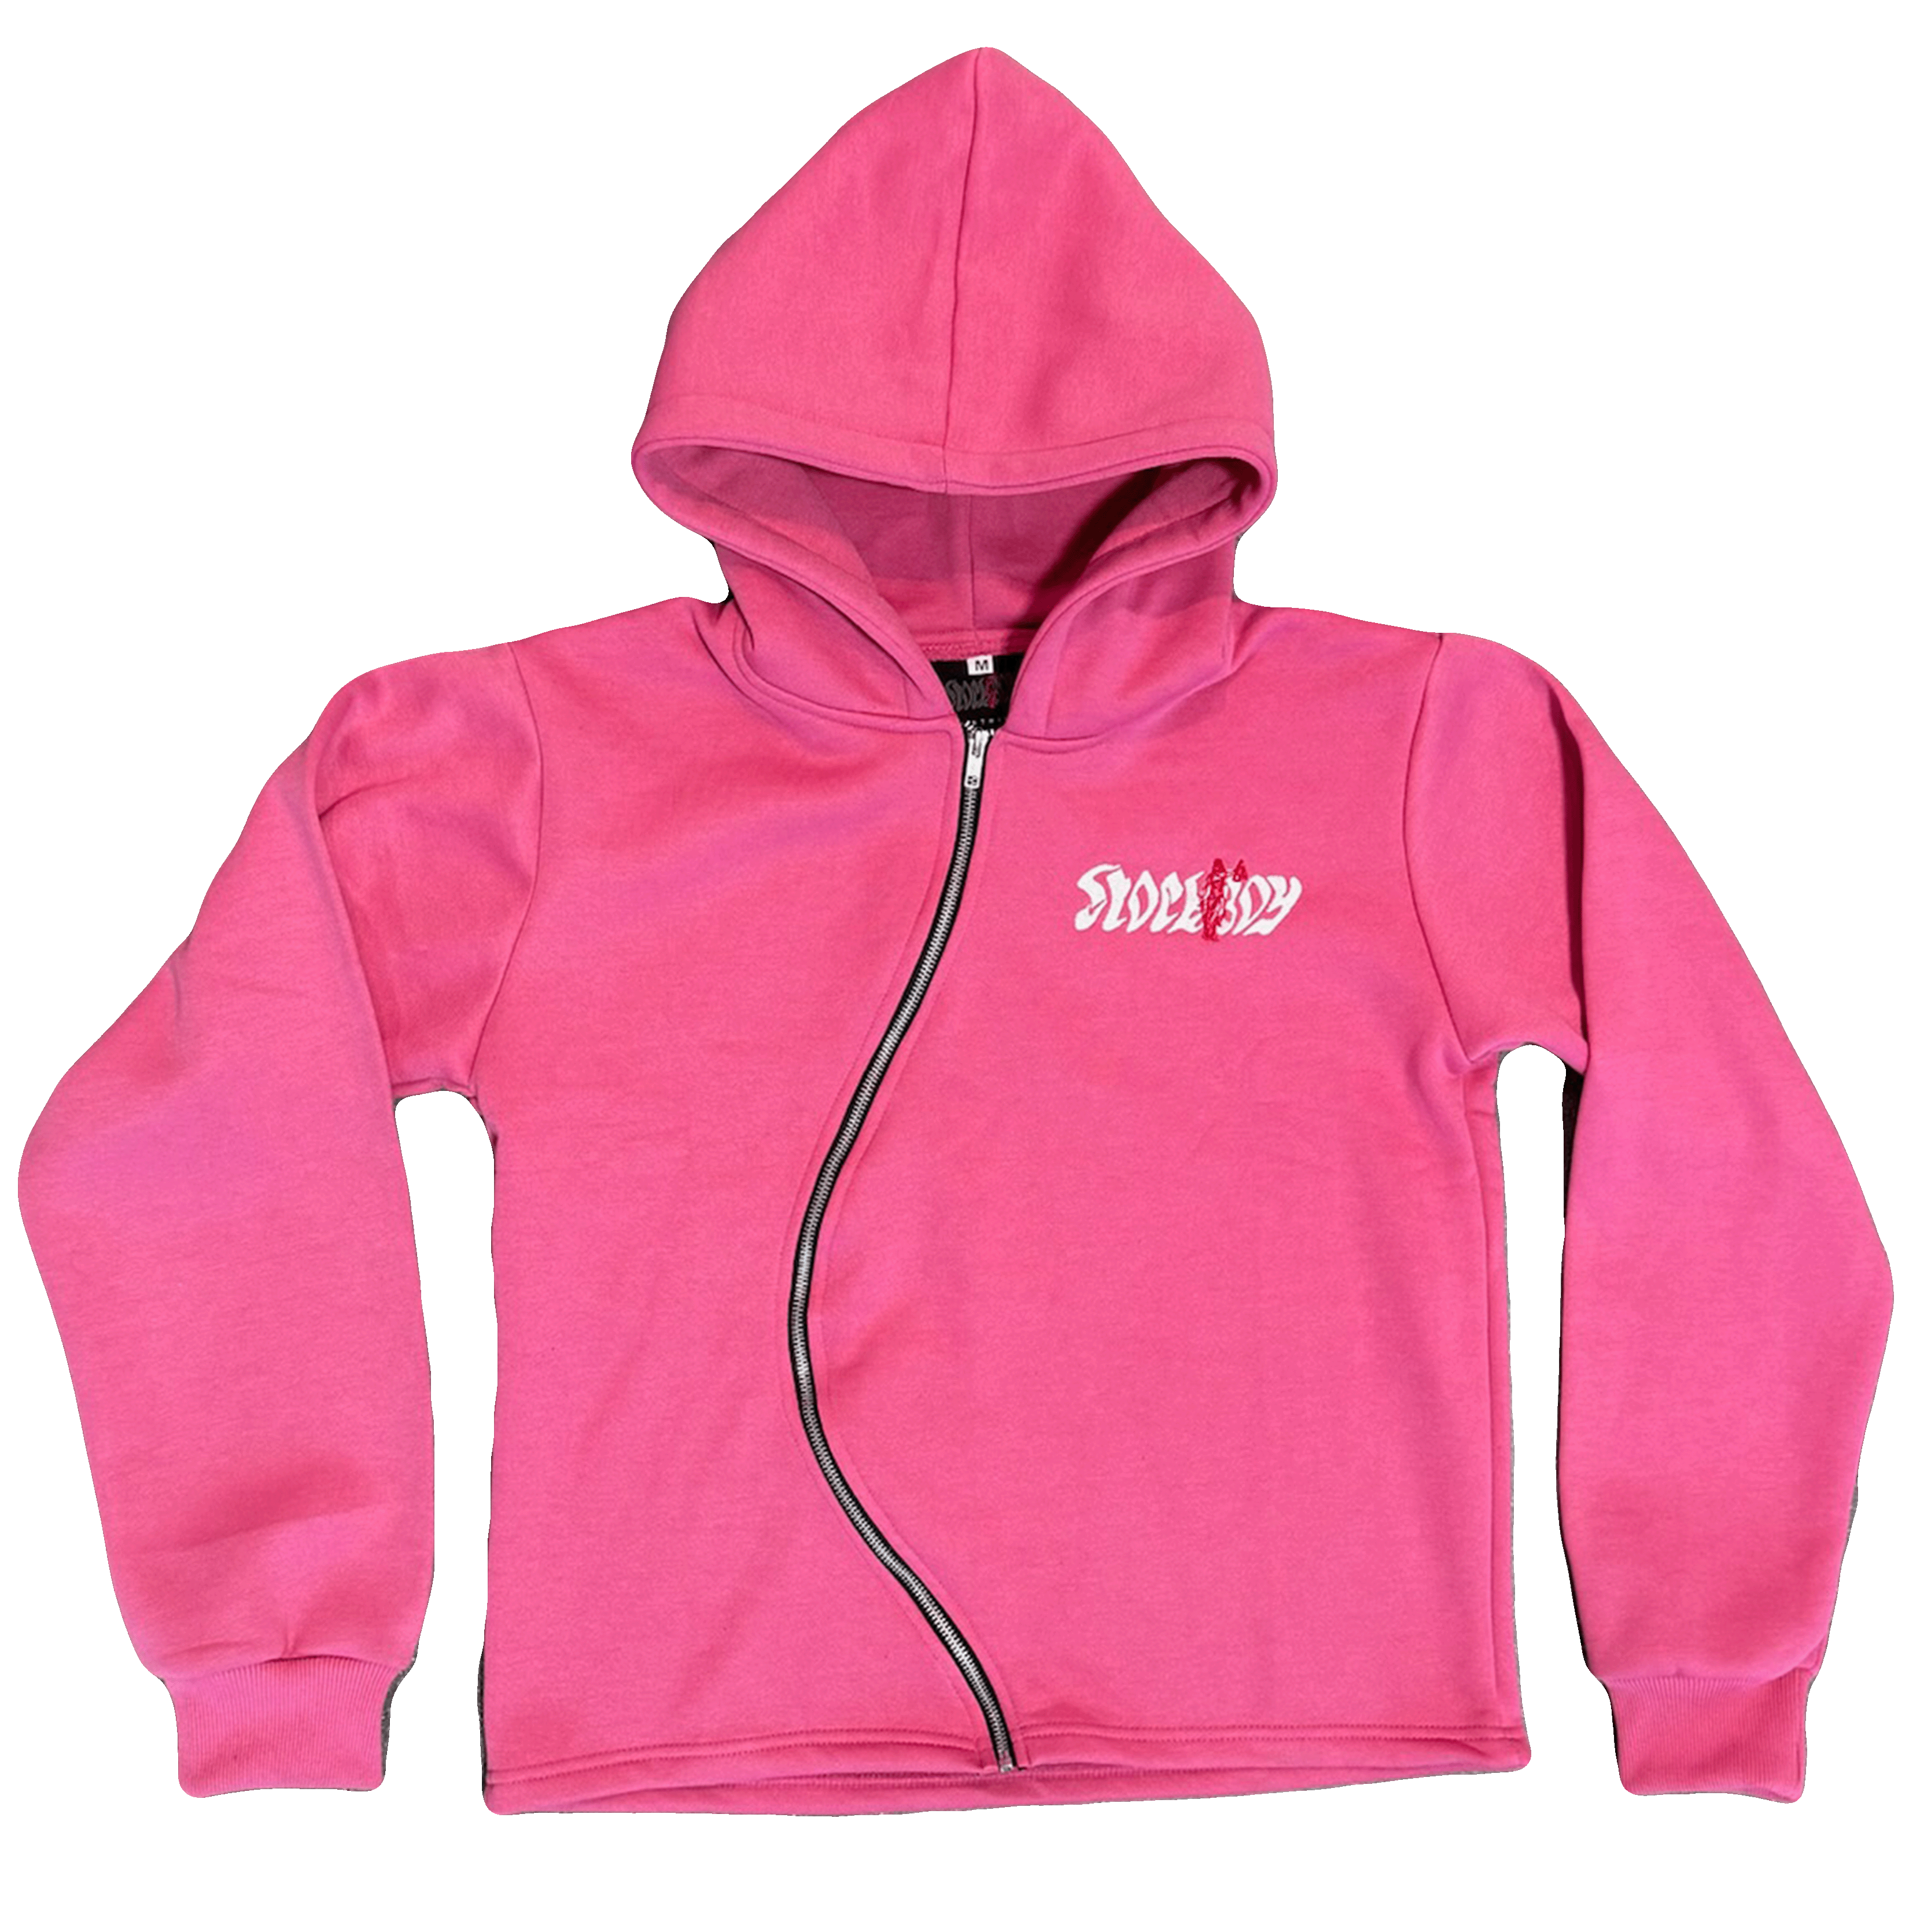 StockBoy Alternative Zip-Up (Pink) 60 USD